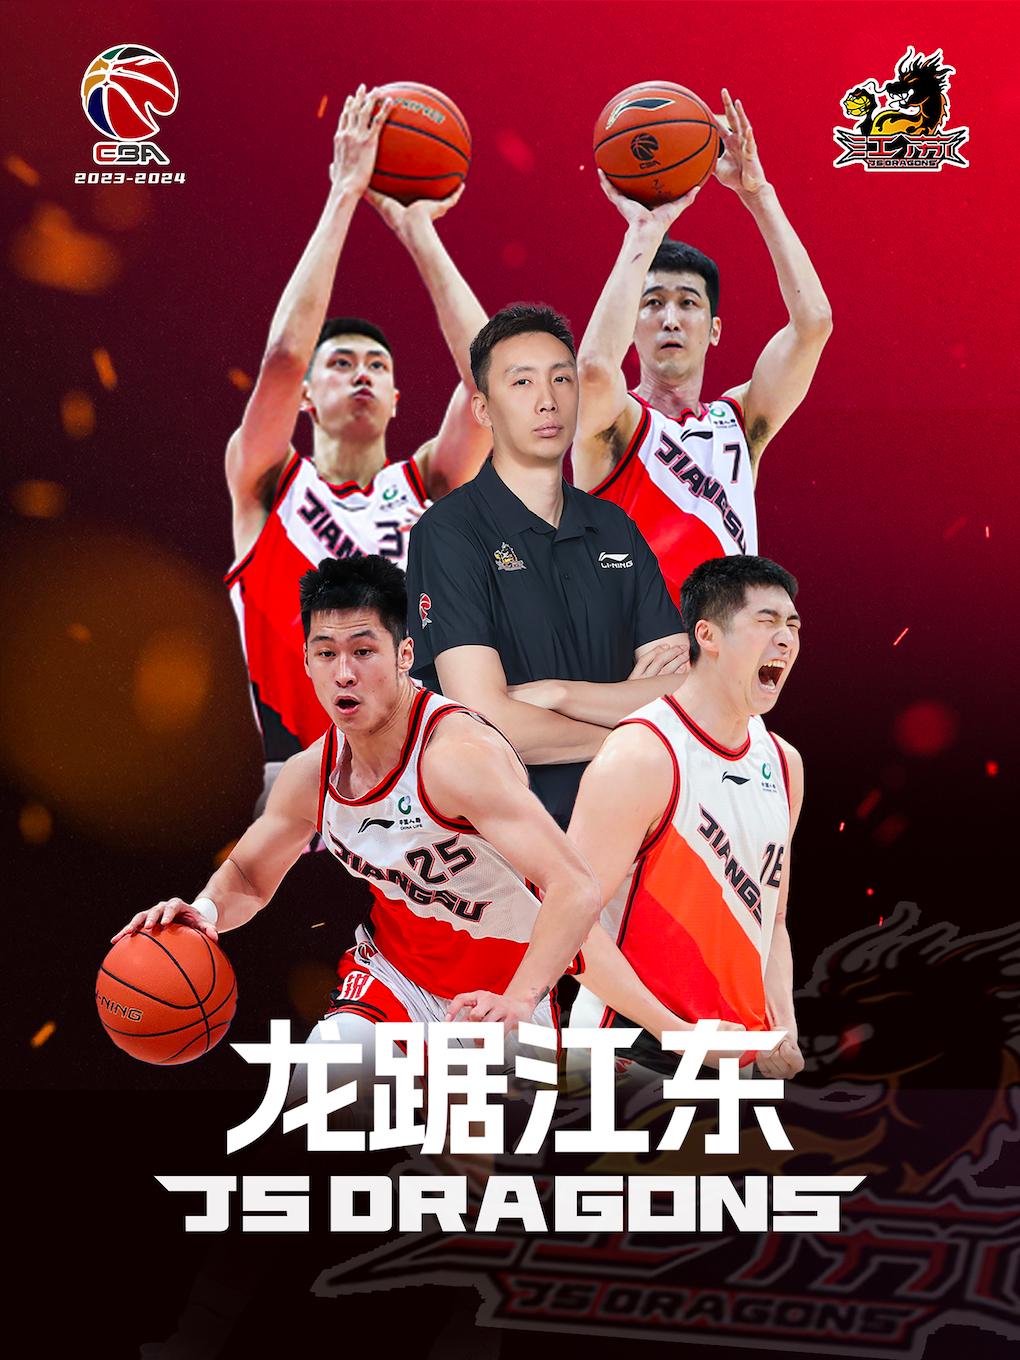 CBA中国男子篮球职业联赛 江苏肯帝亚